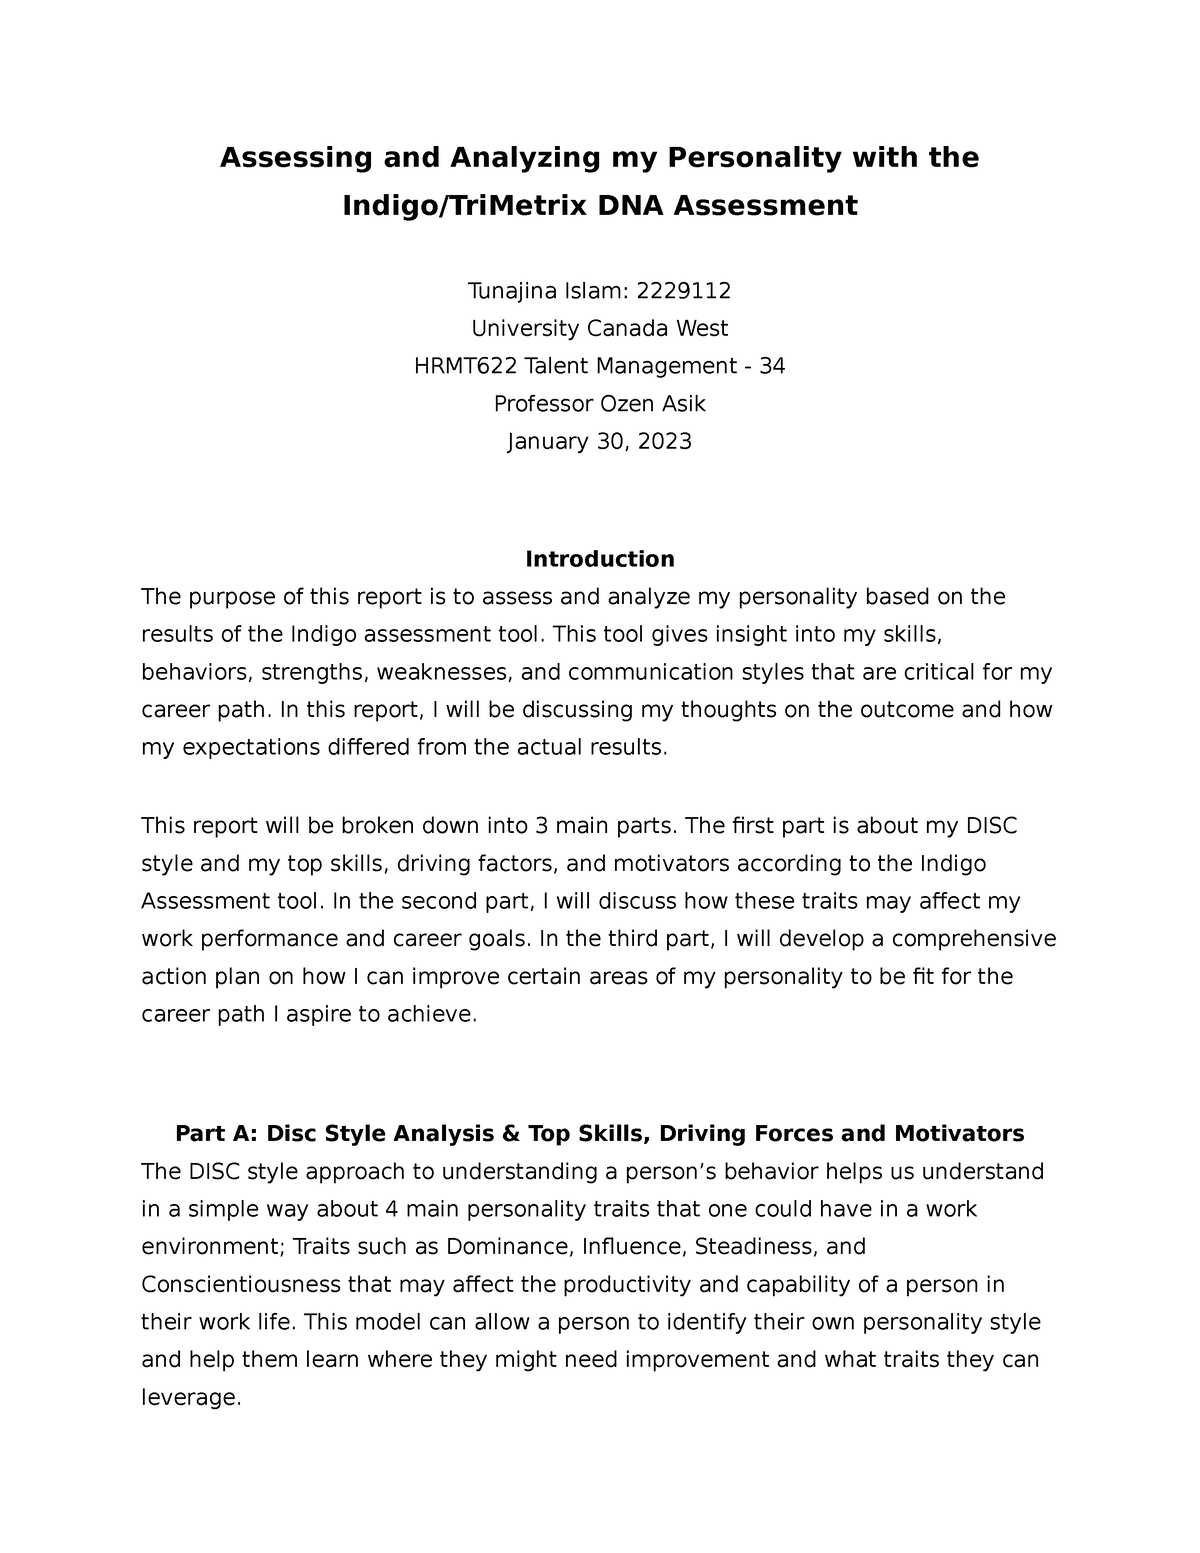 indigo assessment assignment ucw